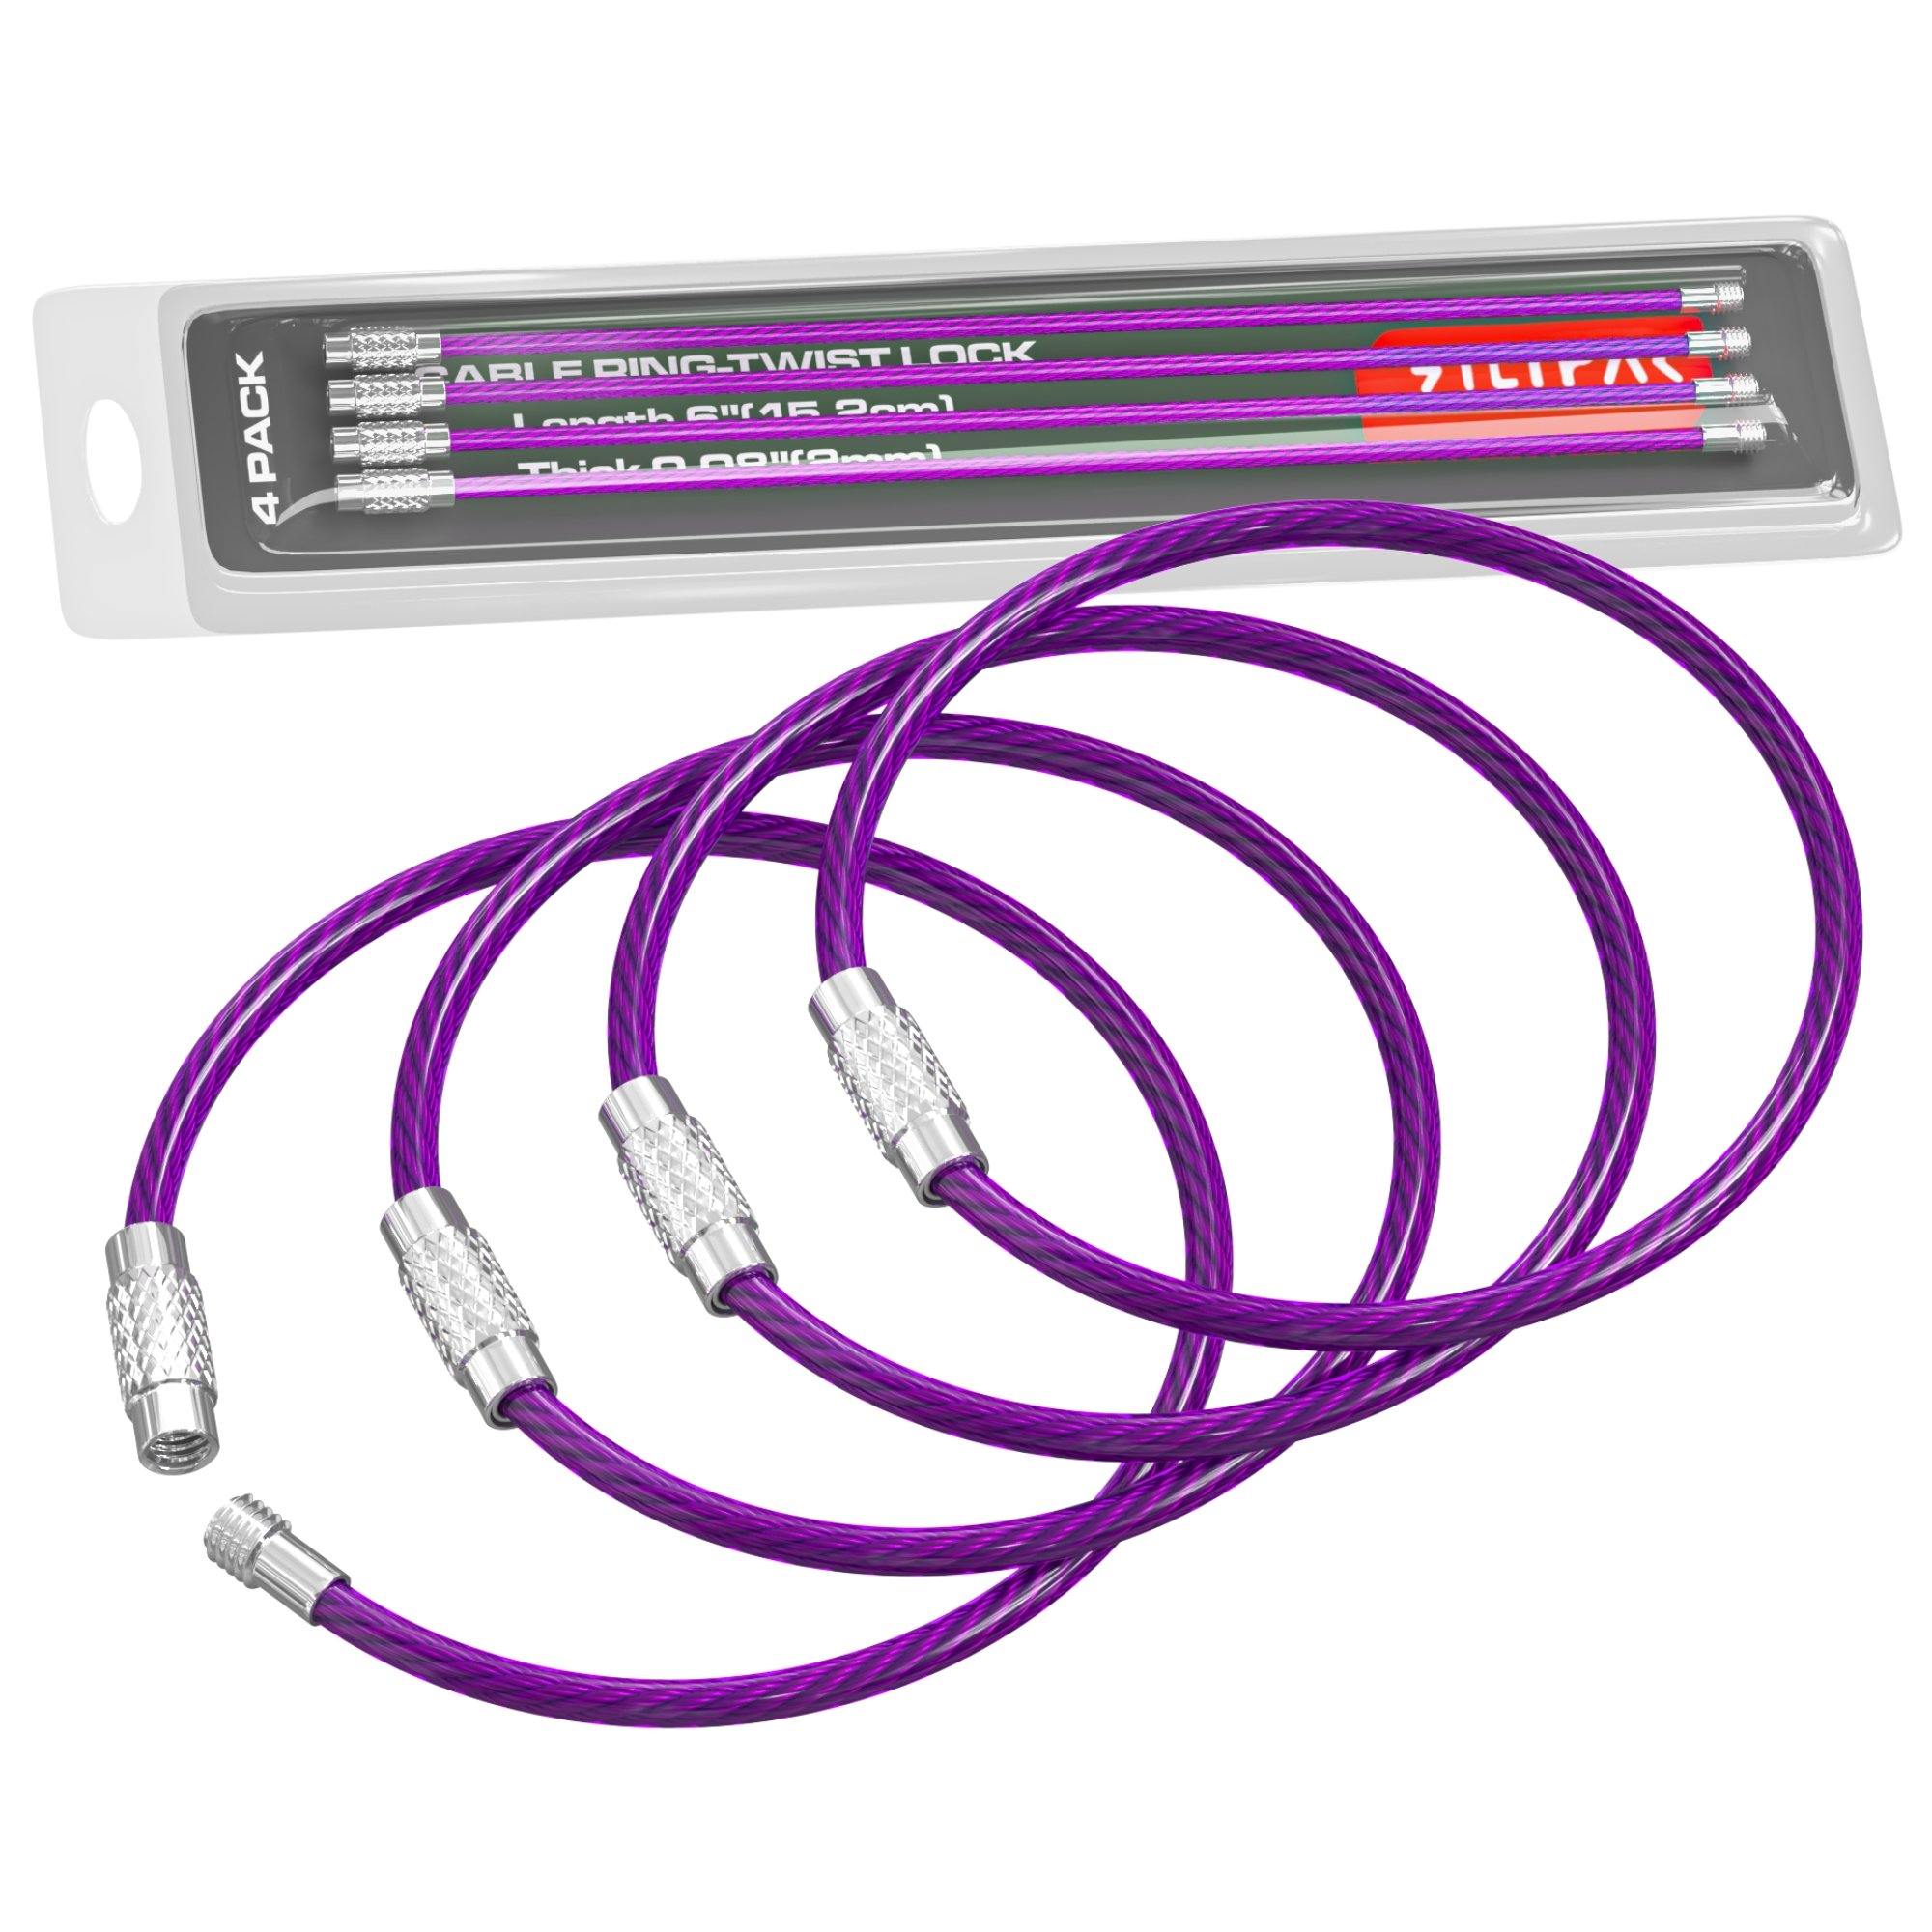 Silipac 6.3" Twist Lock Cable Ring Carabiner (Plastic coated series) - Silipac